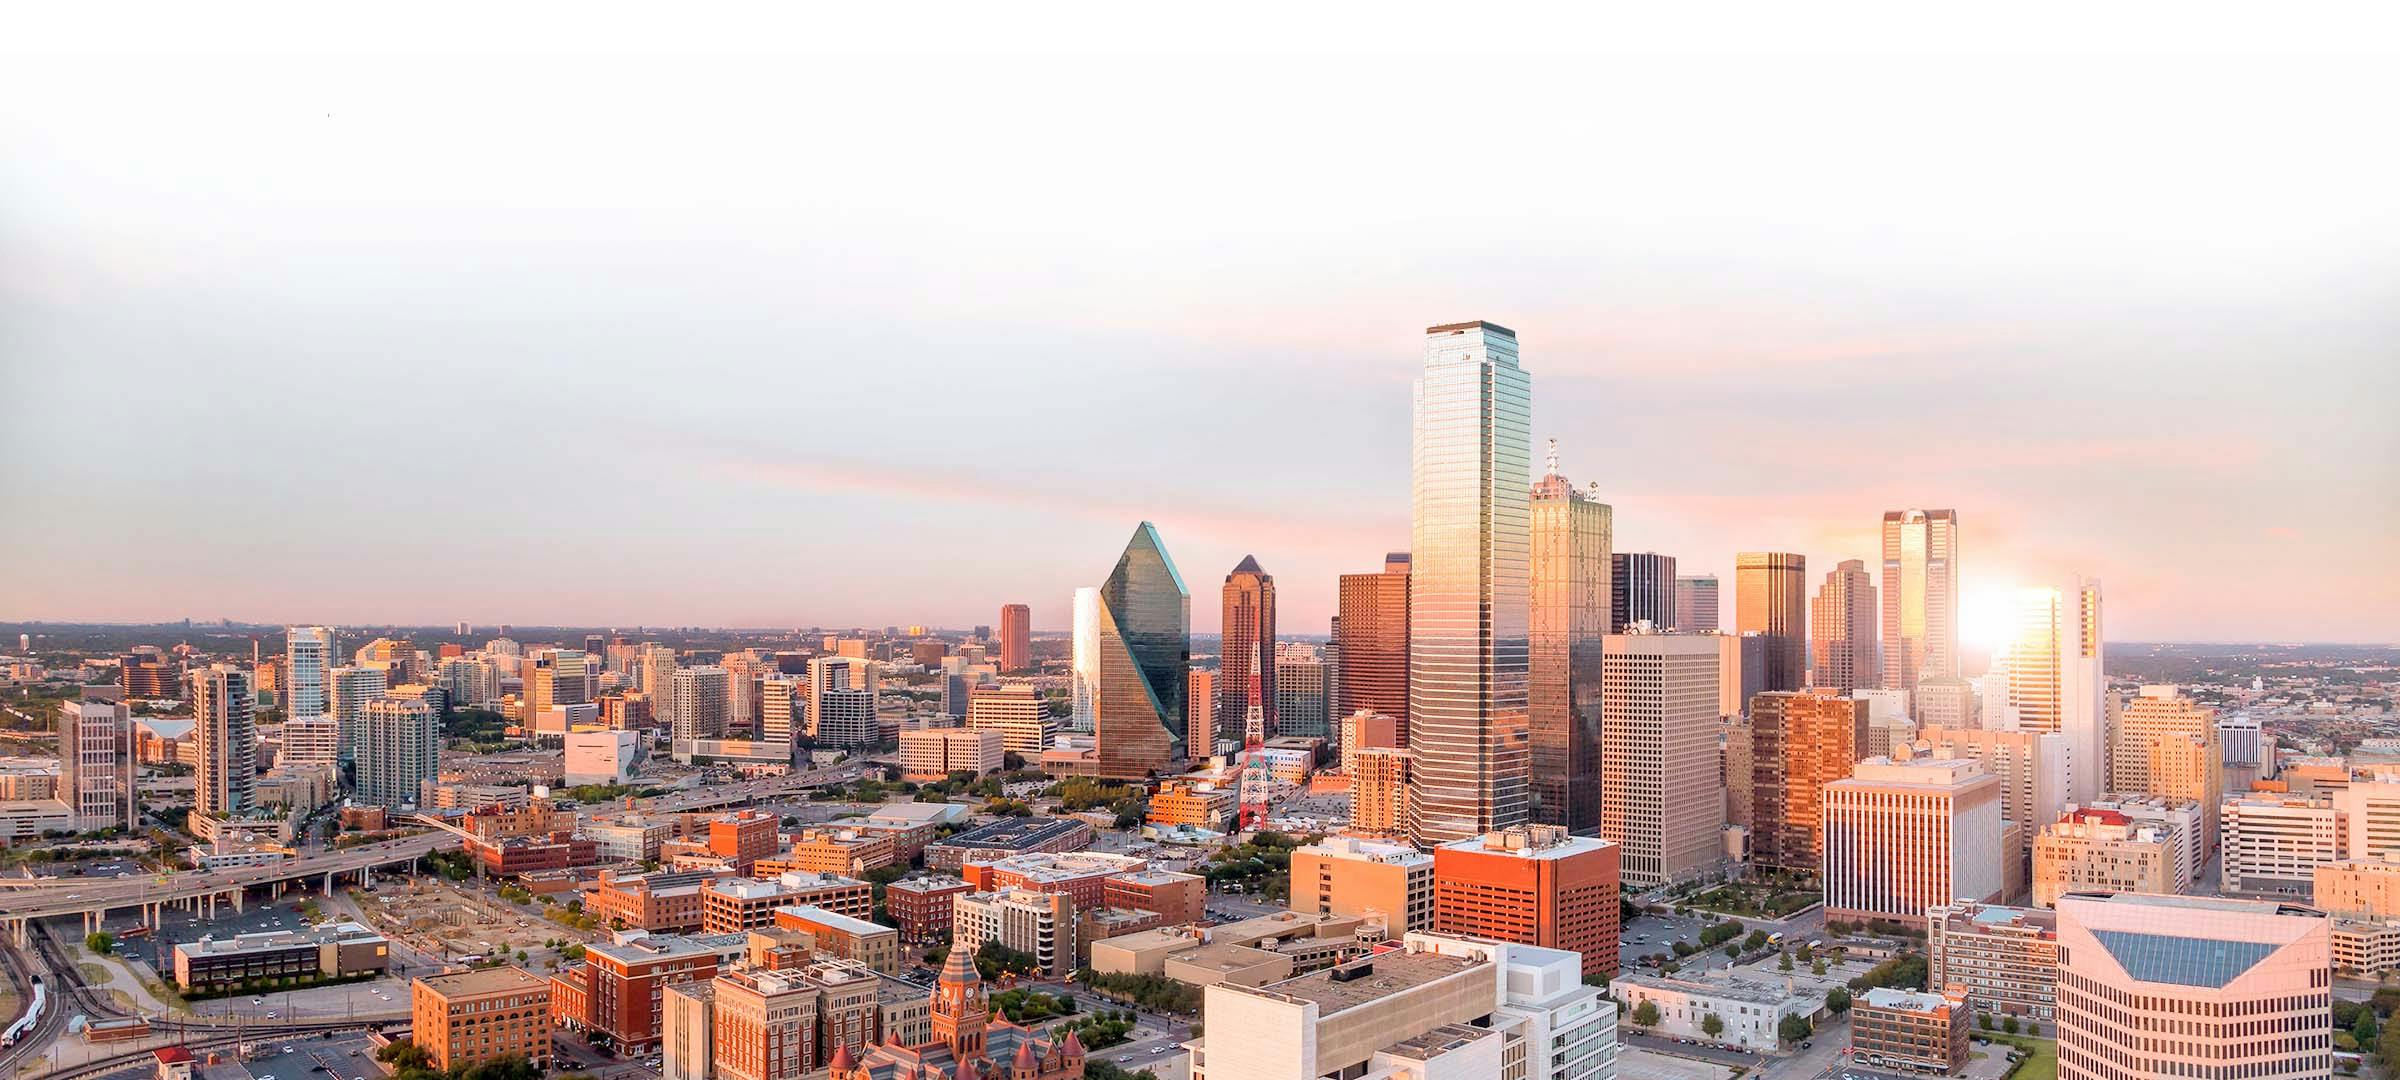 Skyline city view of Dallas